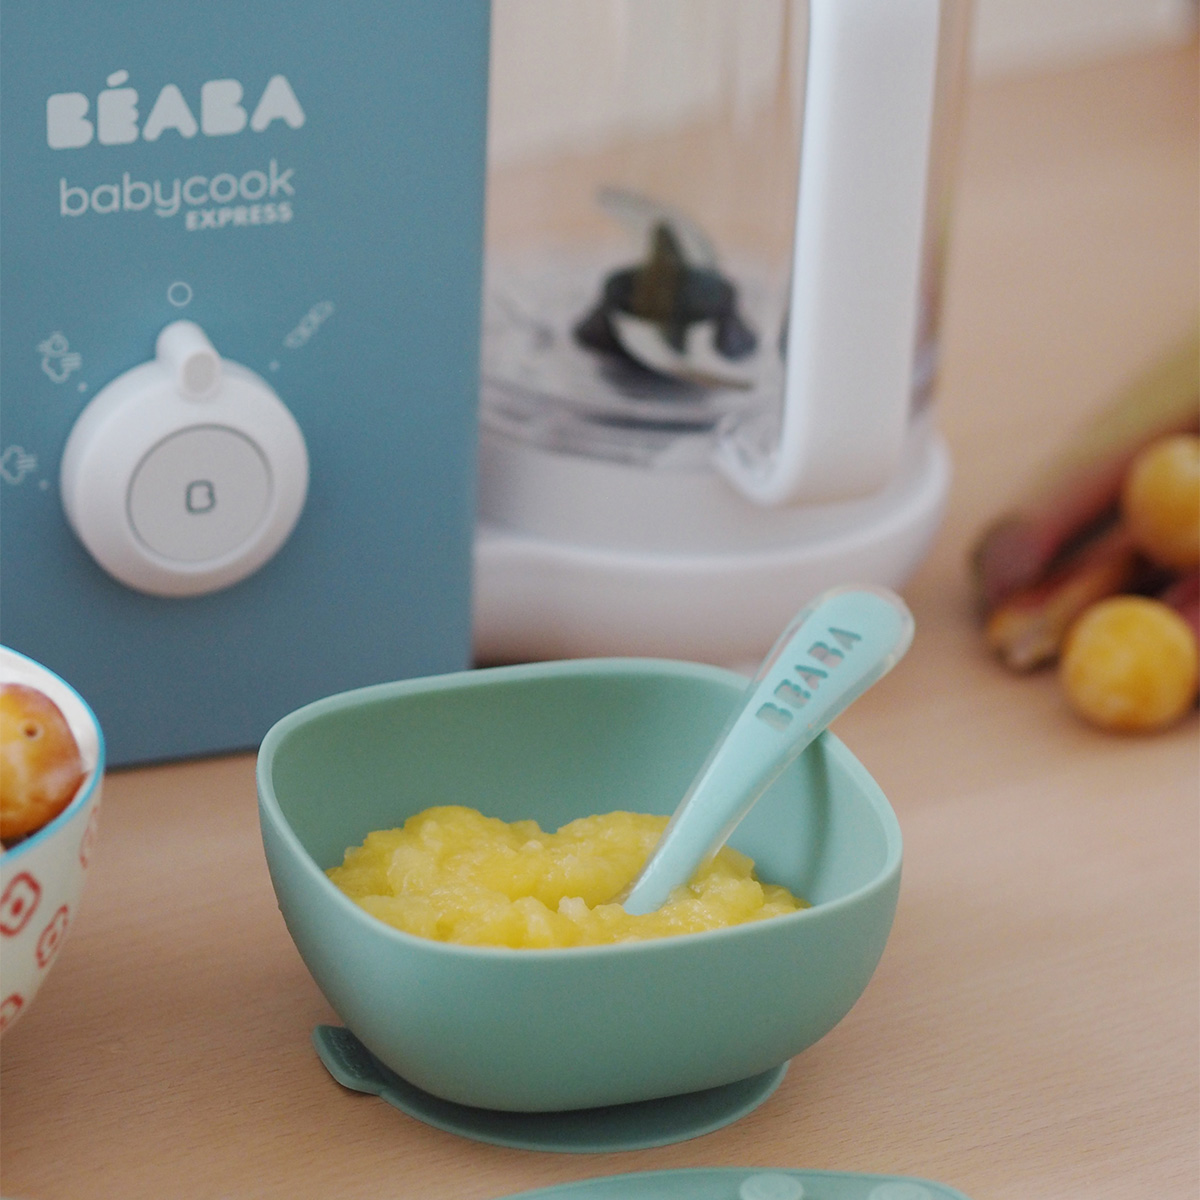 Beaba Babycook Express Baby Food Maker - Baltic Blue